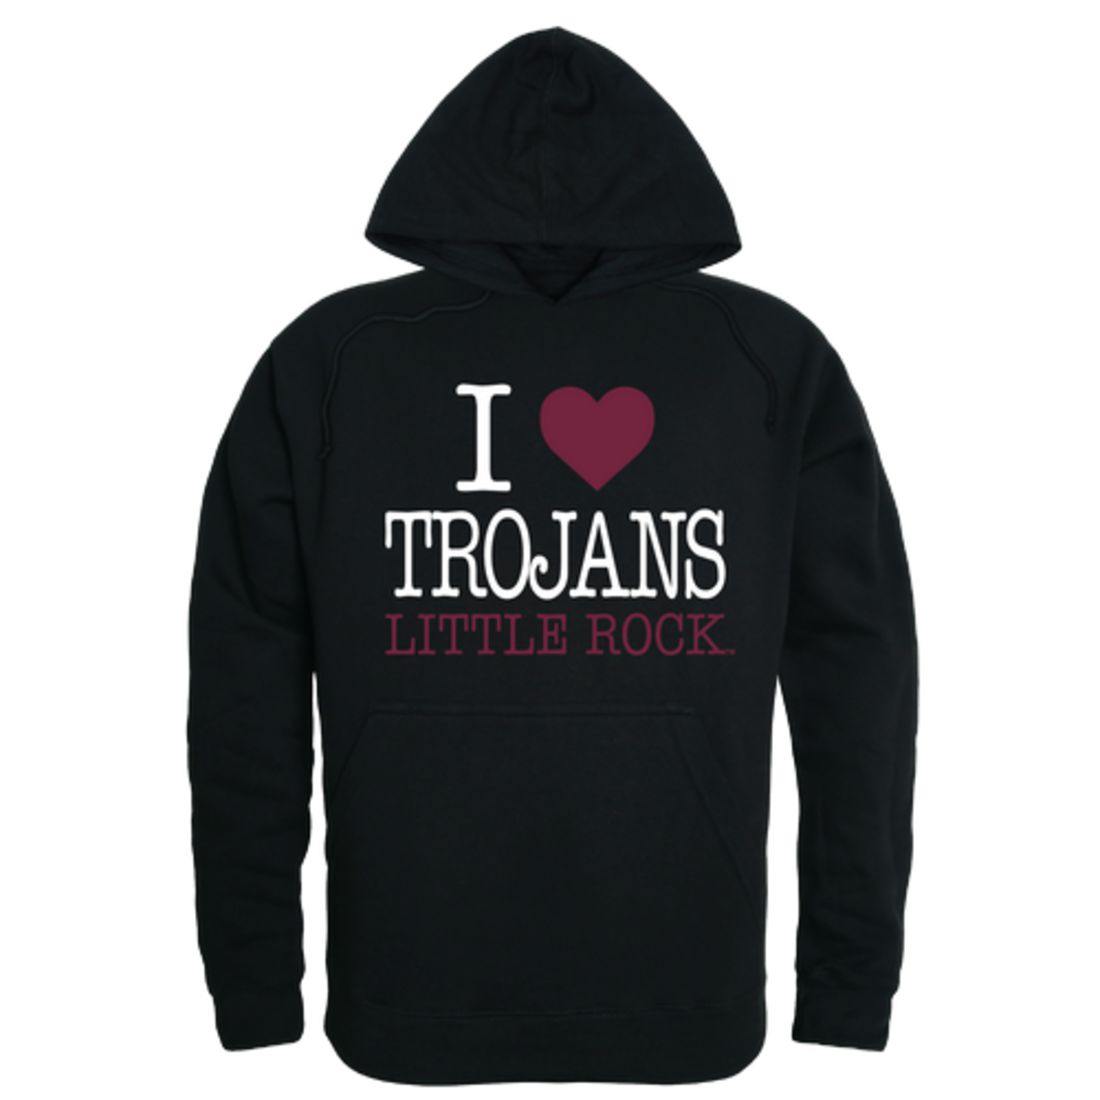 I Love Arkansas at Little Rock Trojans Hoodie Sweatshirt-Campus-Wardrobe